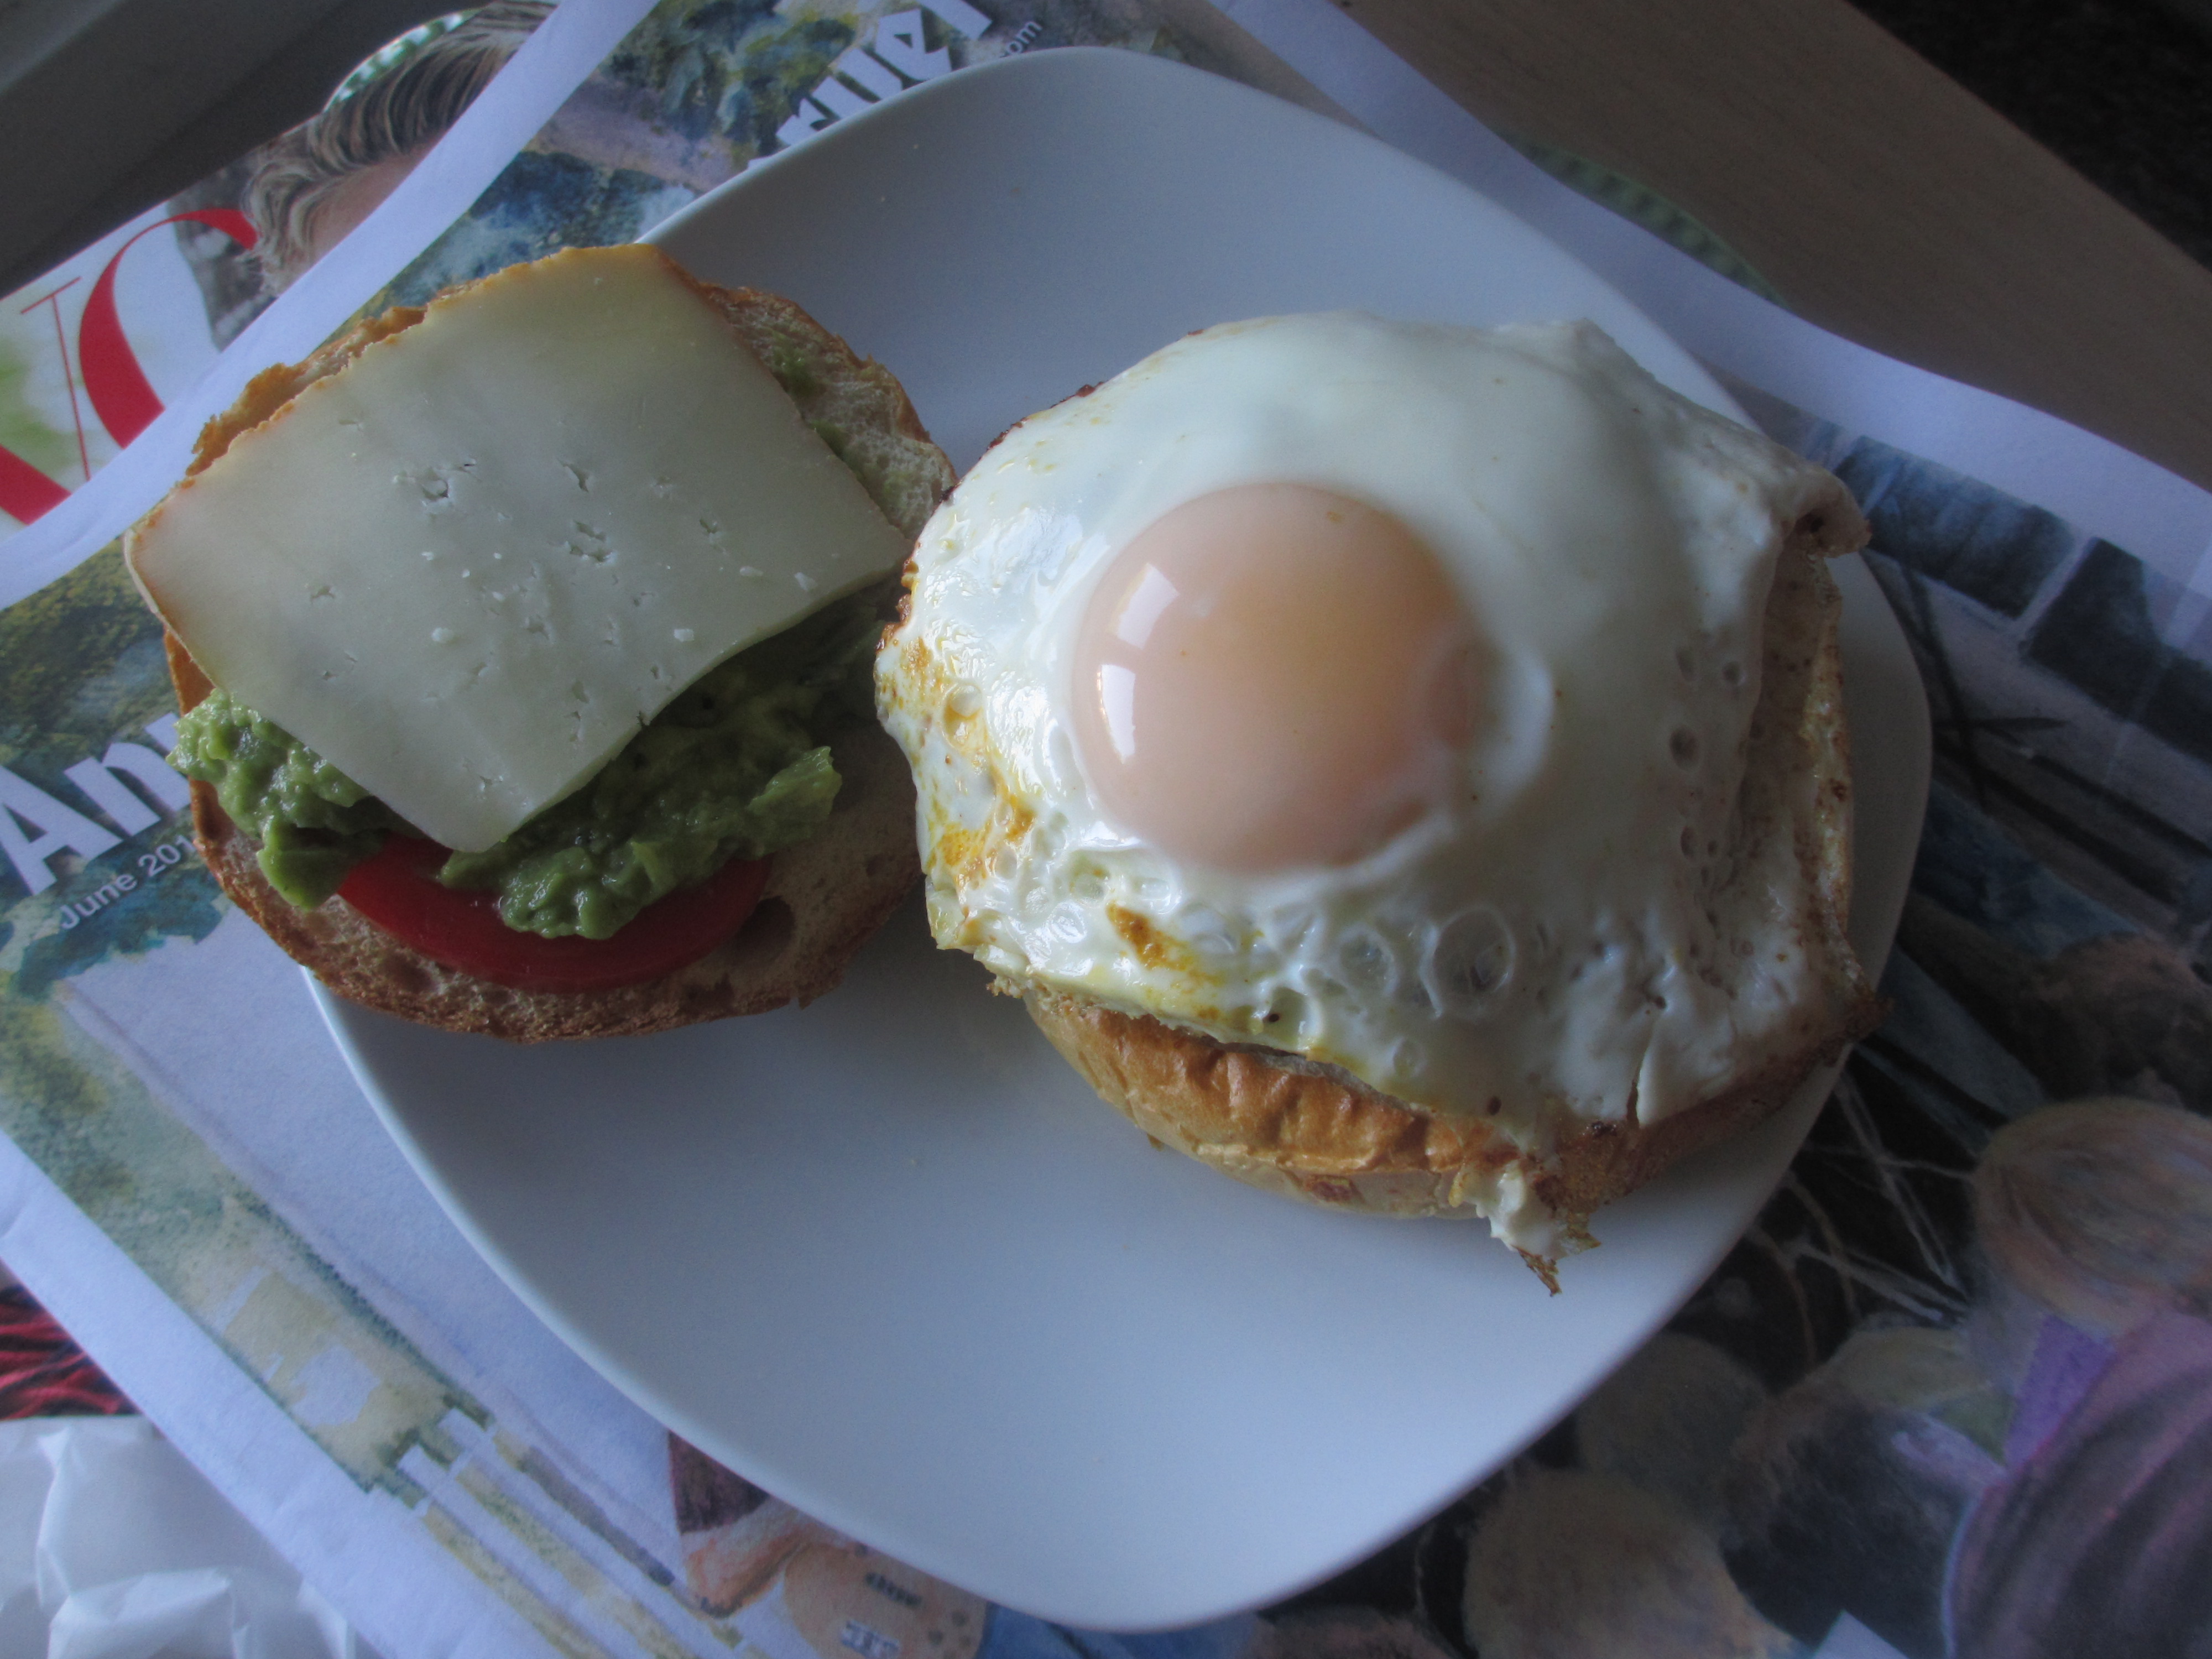 Turkey burger and fried egg on a bun